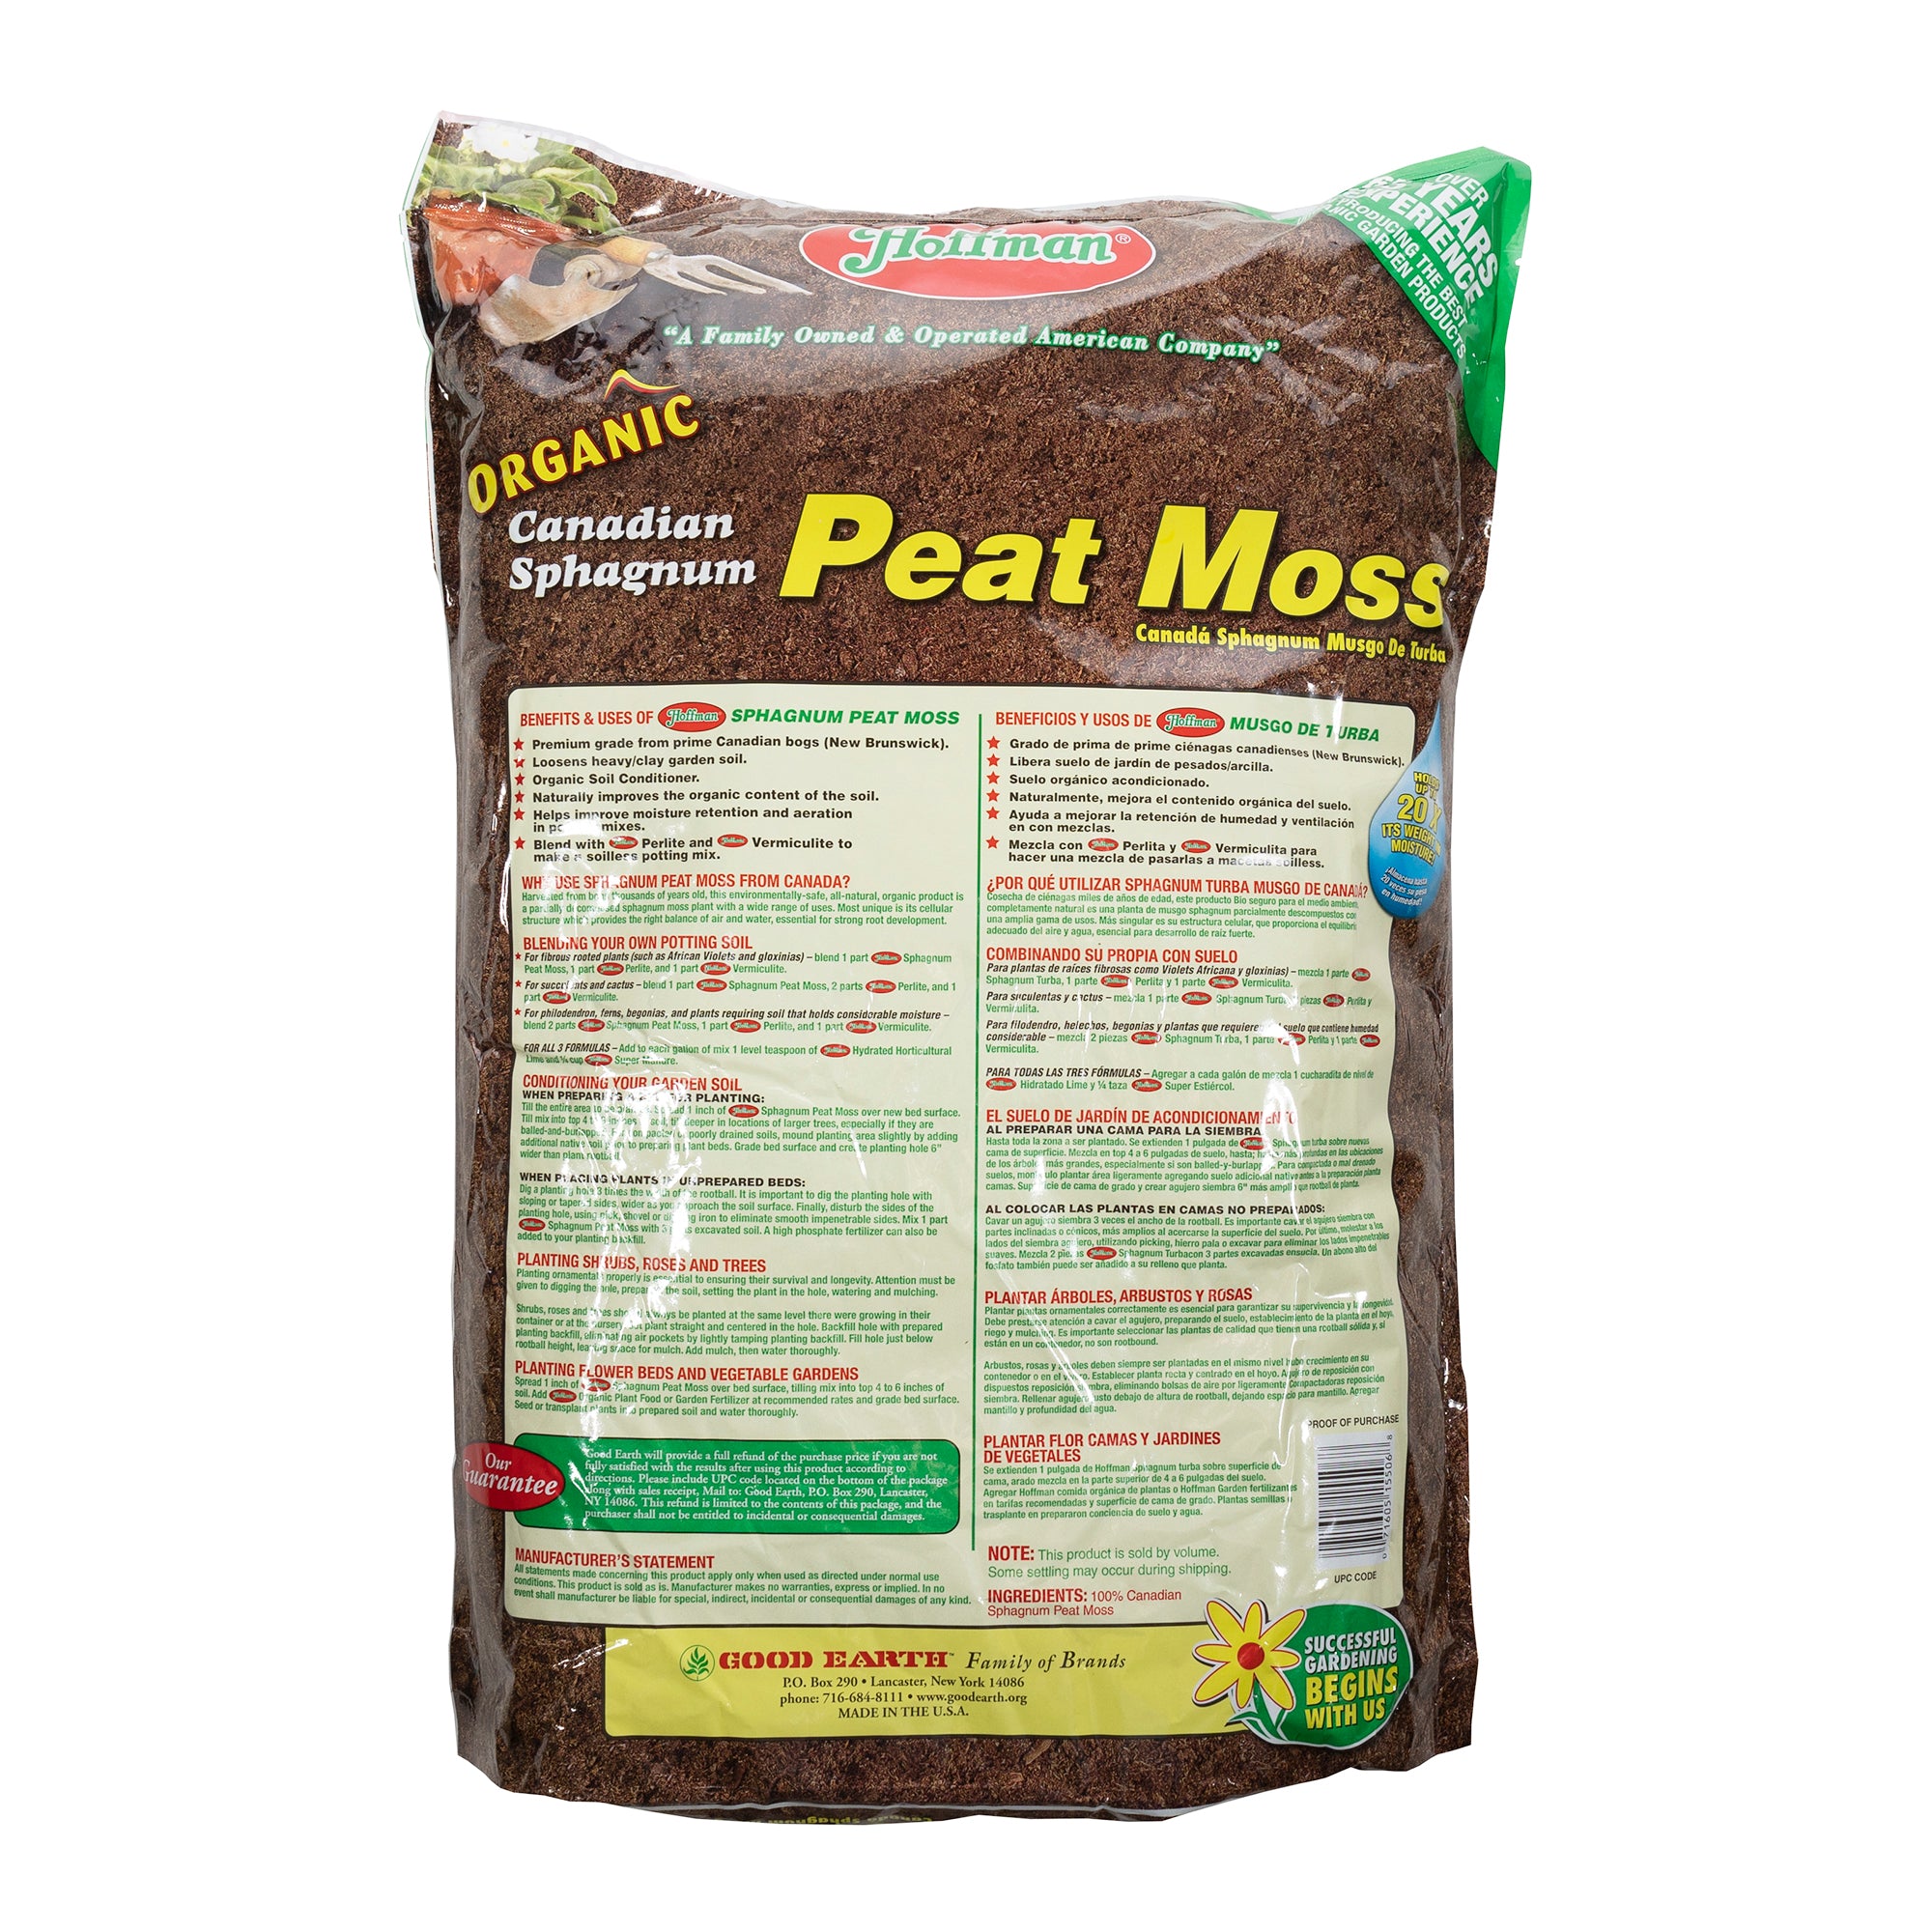 Hoffman Canadian Sphagnum Peat Moss Soil Conditioner, 18 Quart Bag